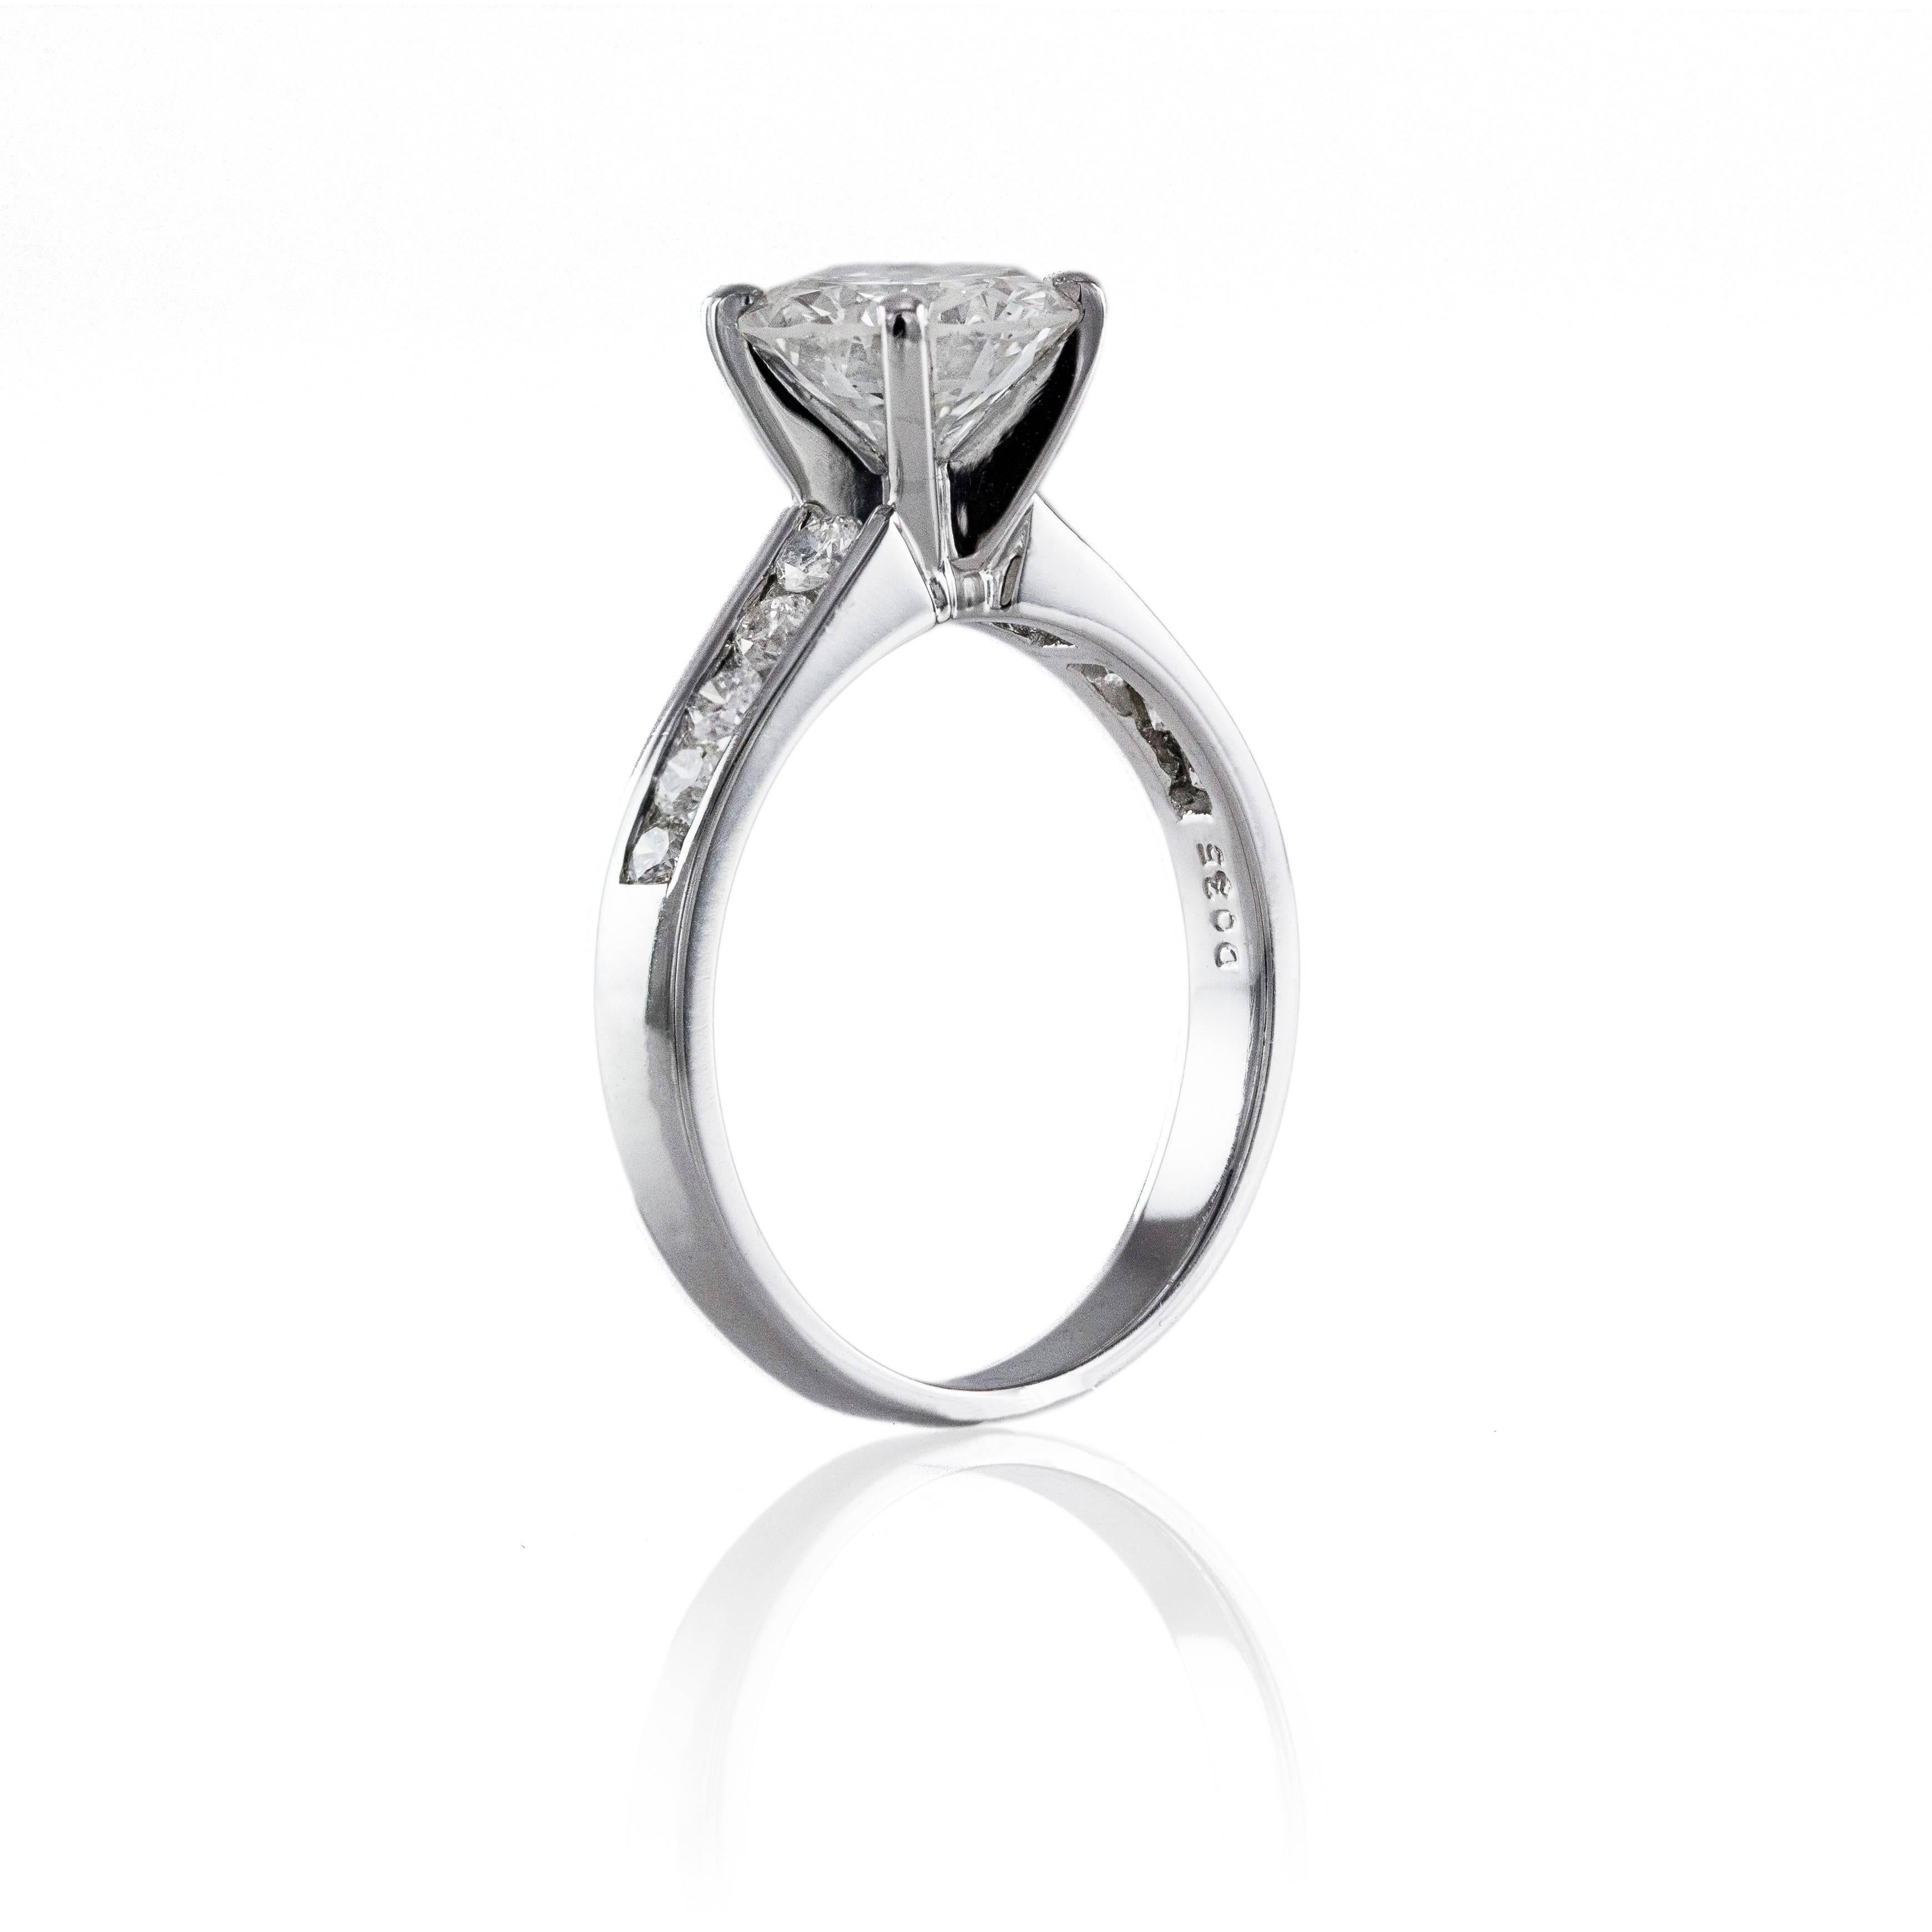 1.62 carat diamond ring